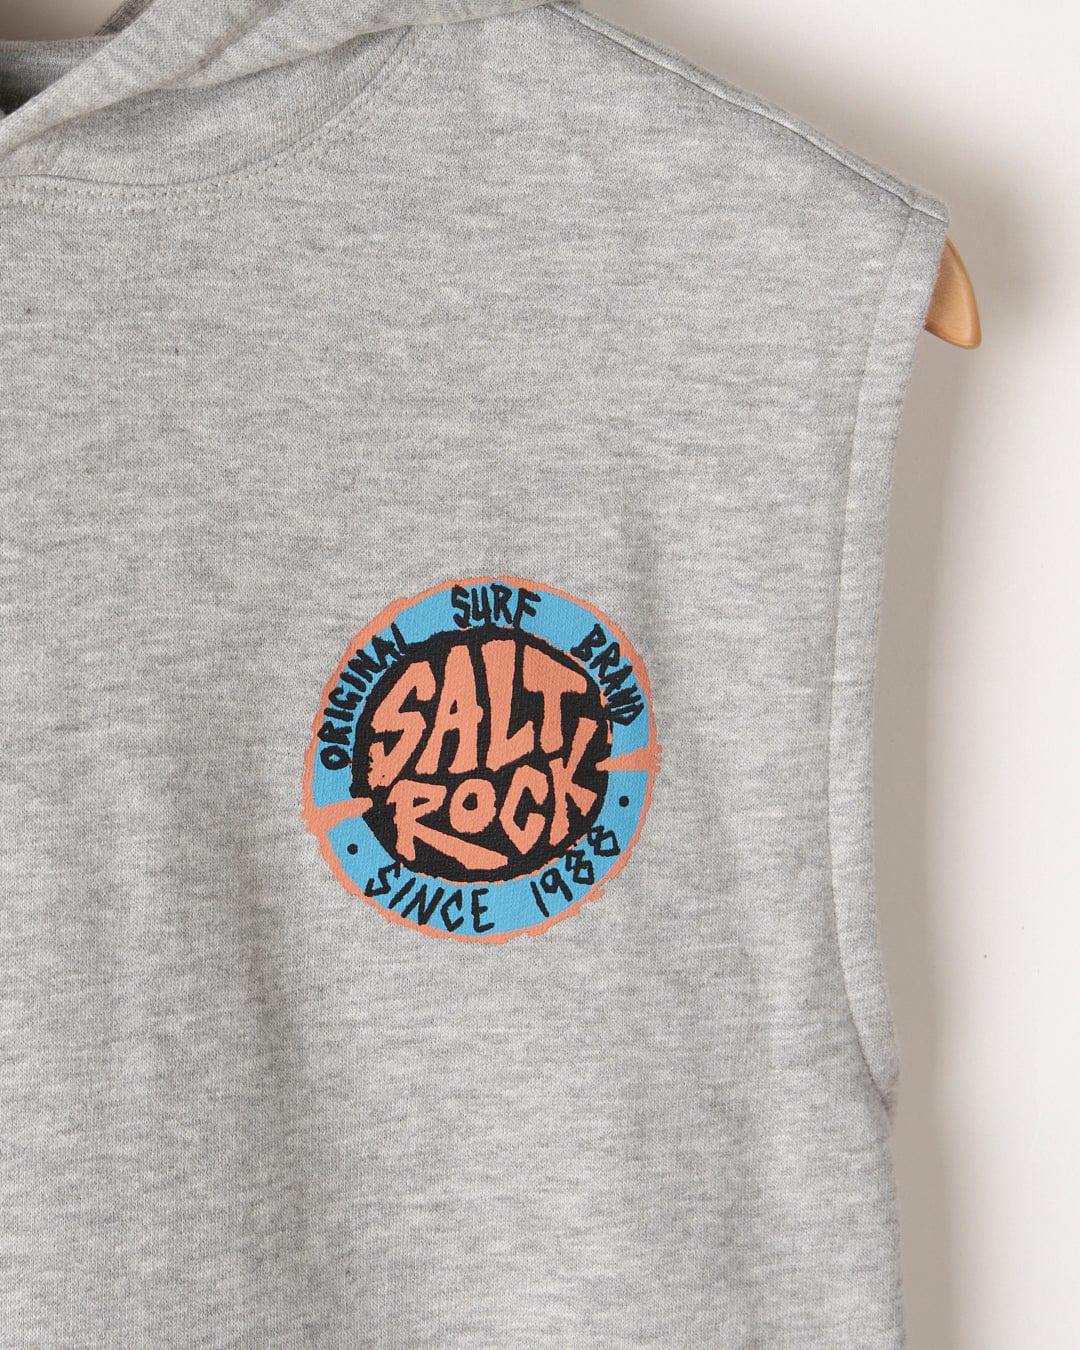 Grey melange sleeveless t-shirt with a round "SR Original - Kids Sleeveless Pop Hoodie" logo patch on the back by Saltrock.